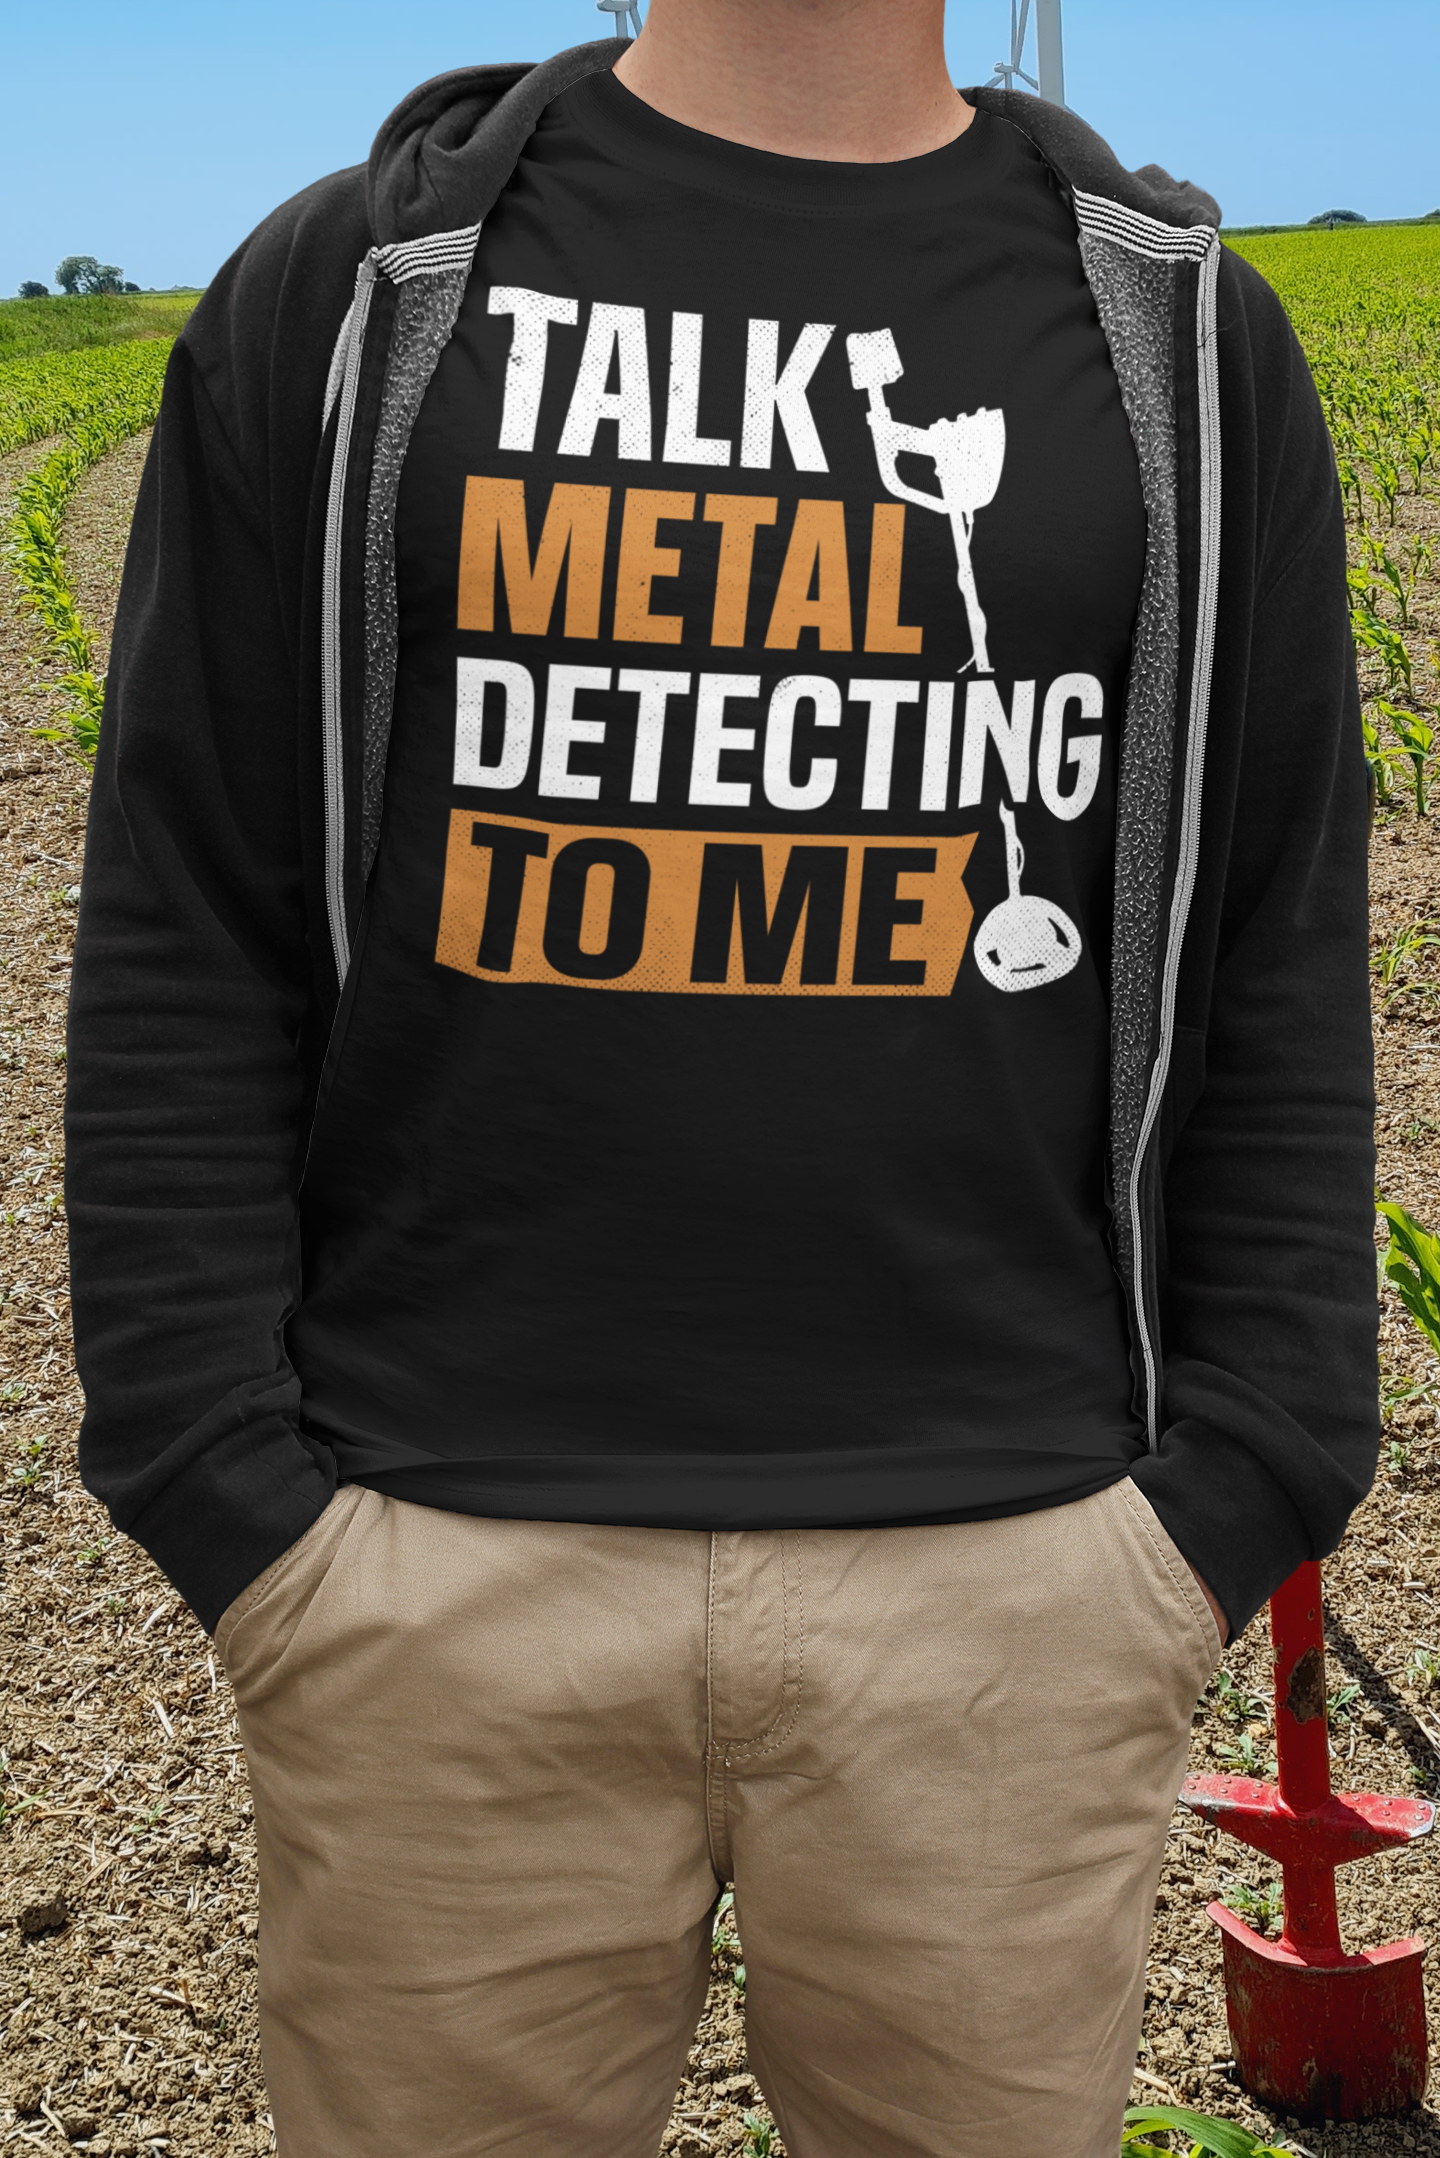 Talk metal detecting to me T-shirt